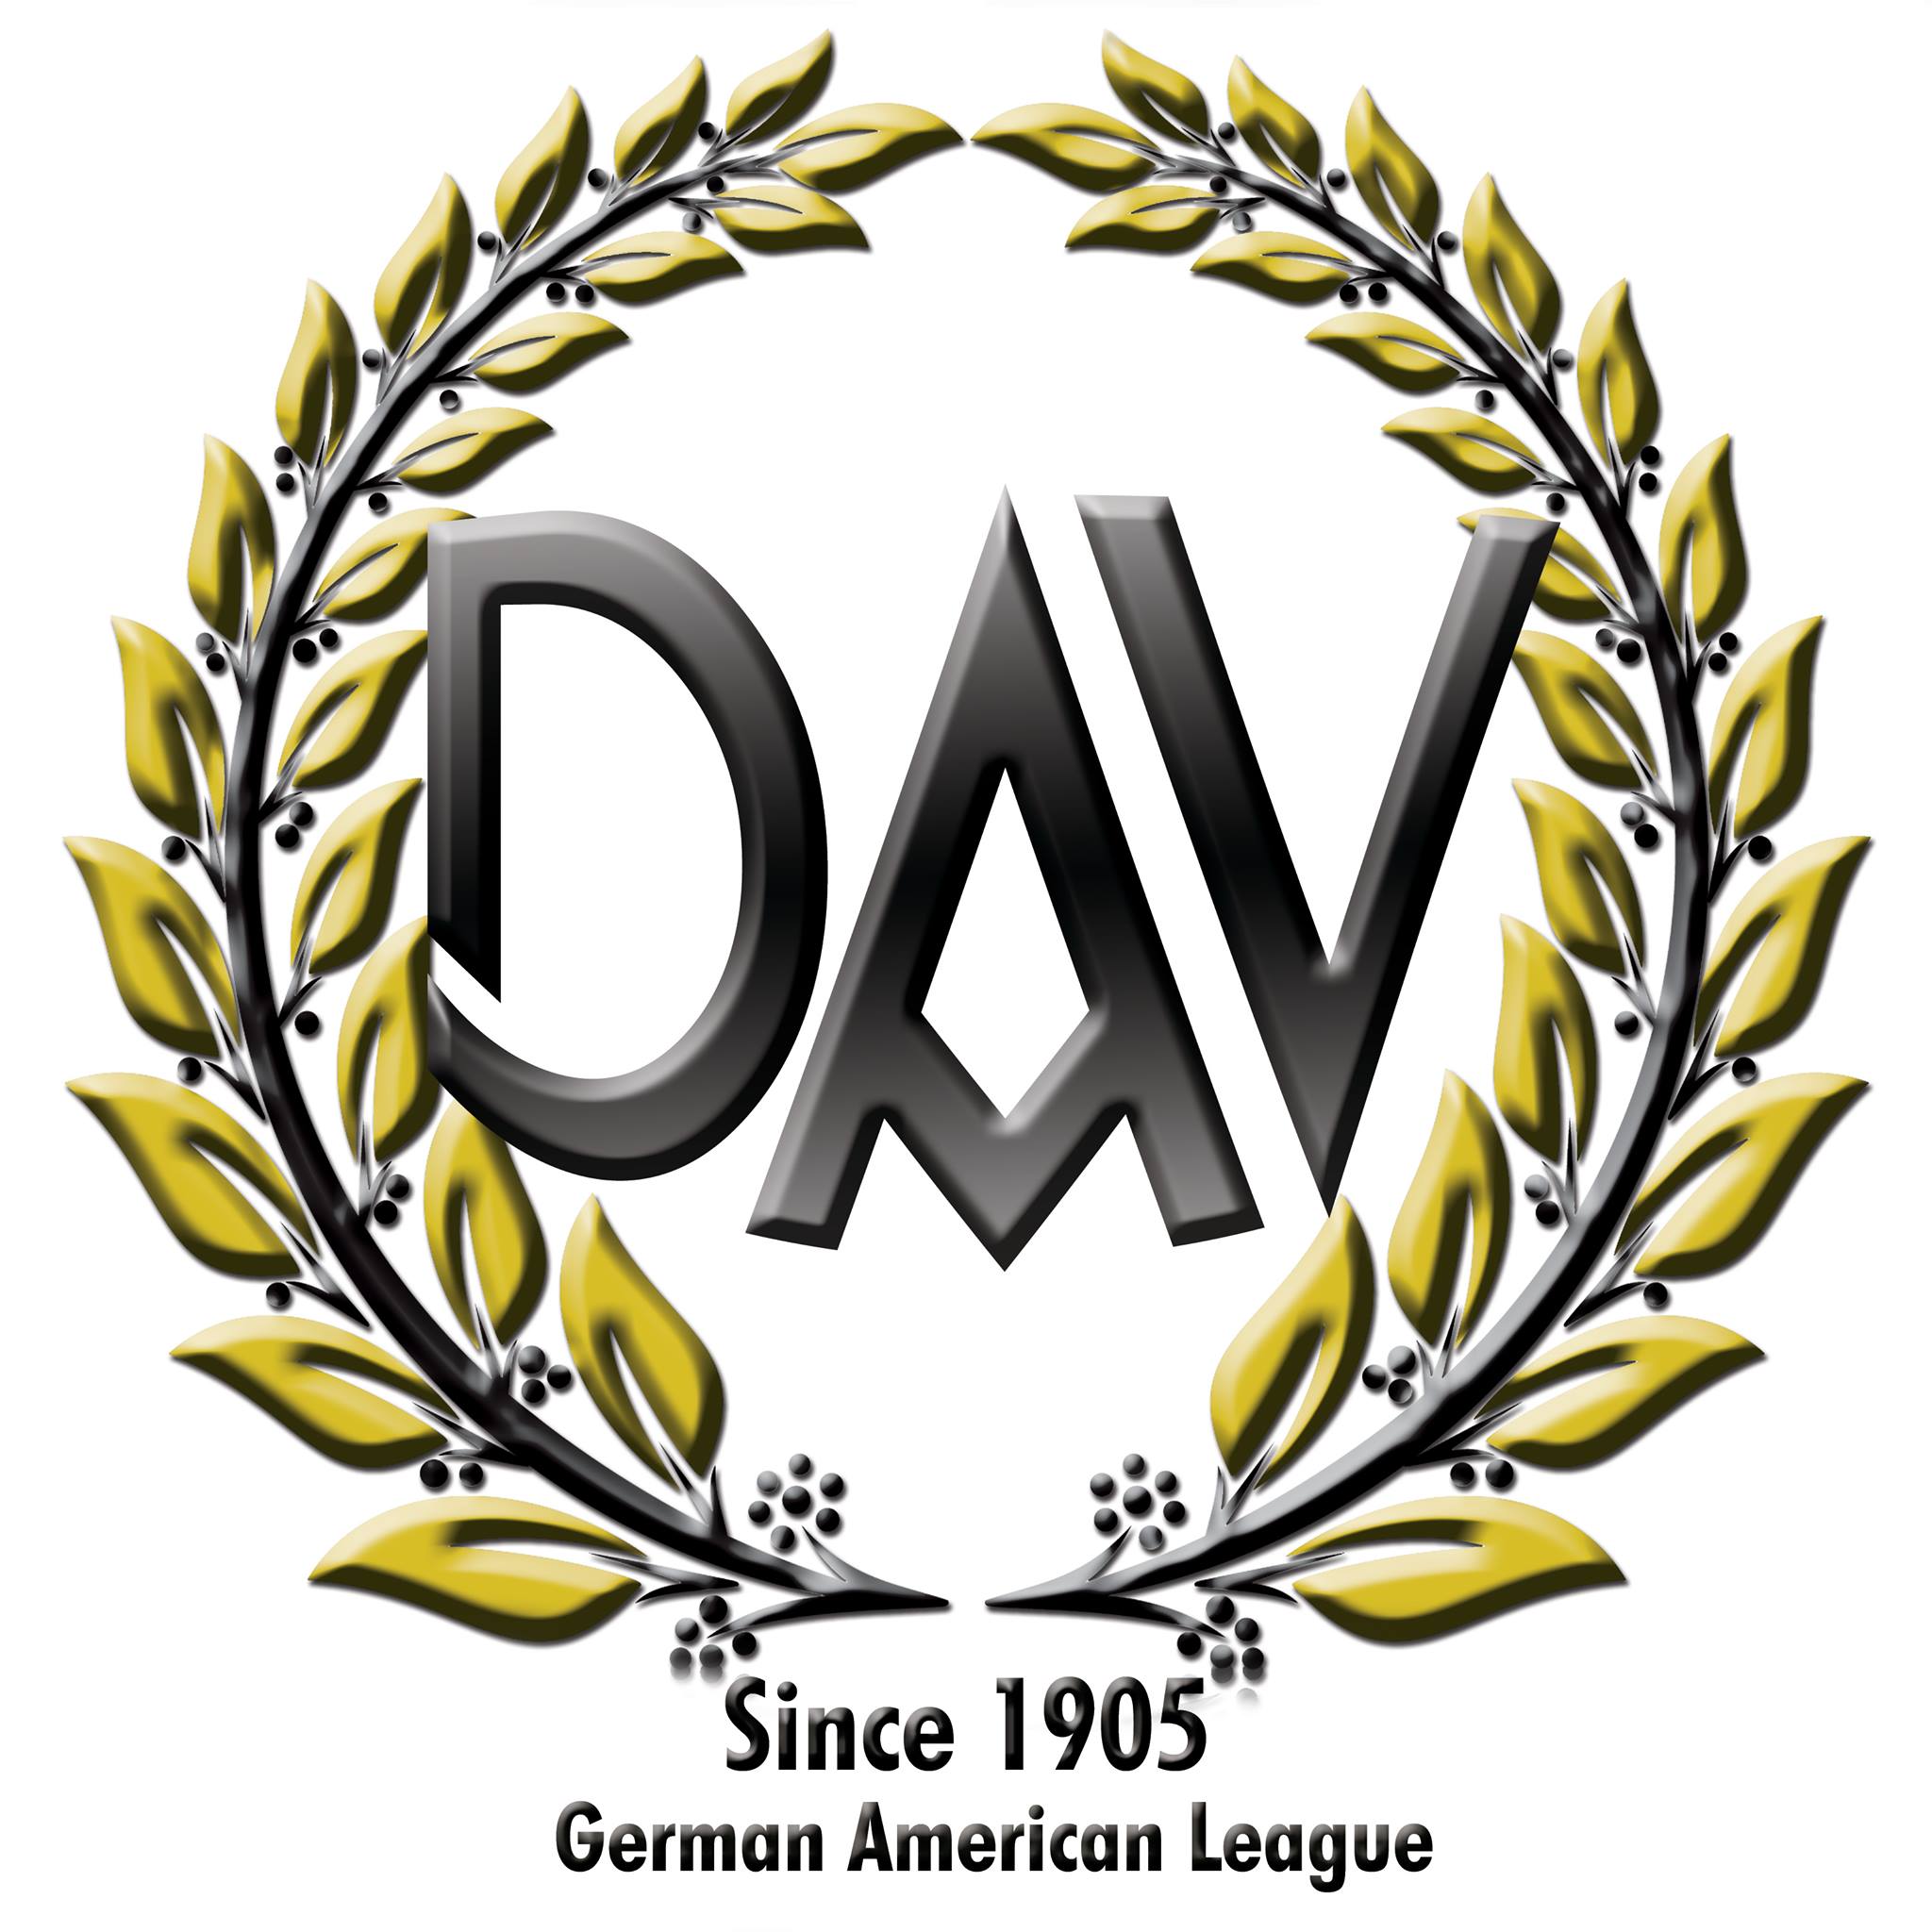 German Organizations in USA - German-American League of Los Angeles, Inc., Ltd.